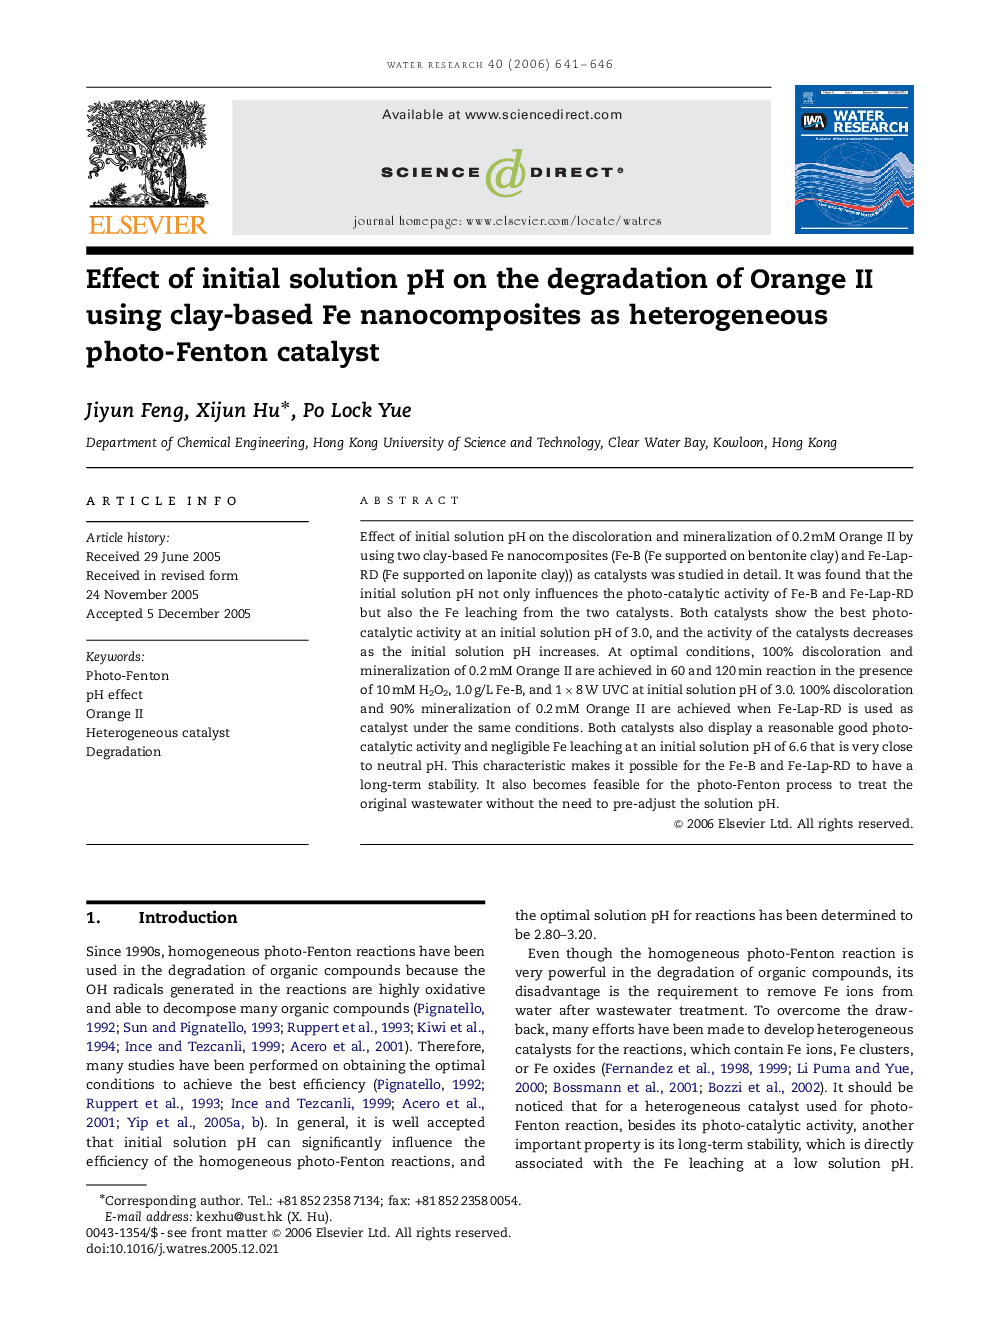 Effect of initial solution pH on the degradation of Orange II using clay-based Fe nanocomposites as heterogeneous photo-Fenton catalyst